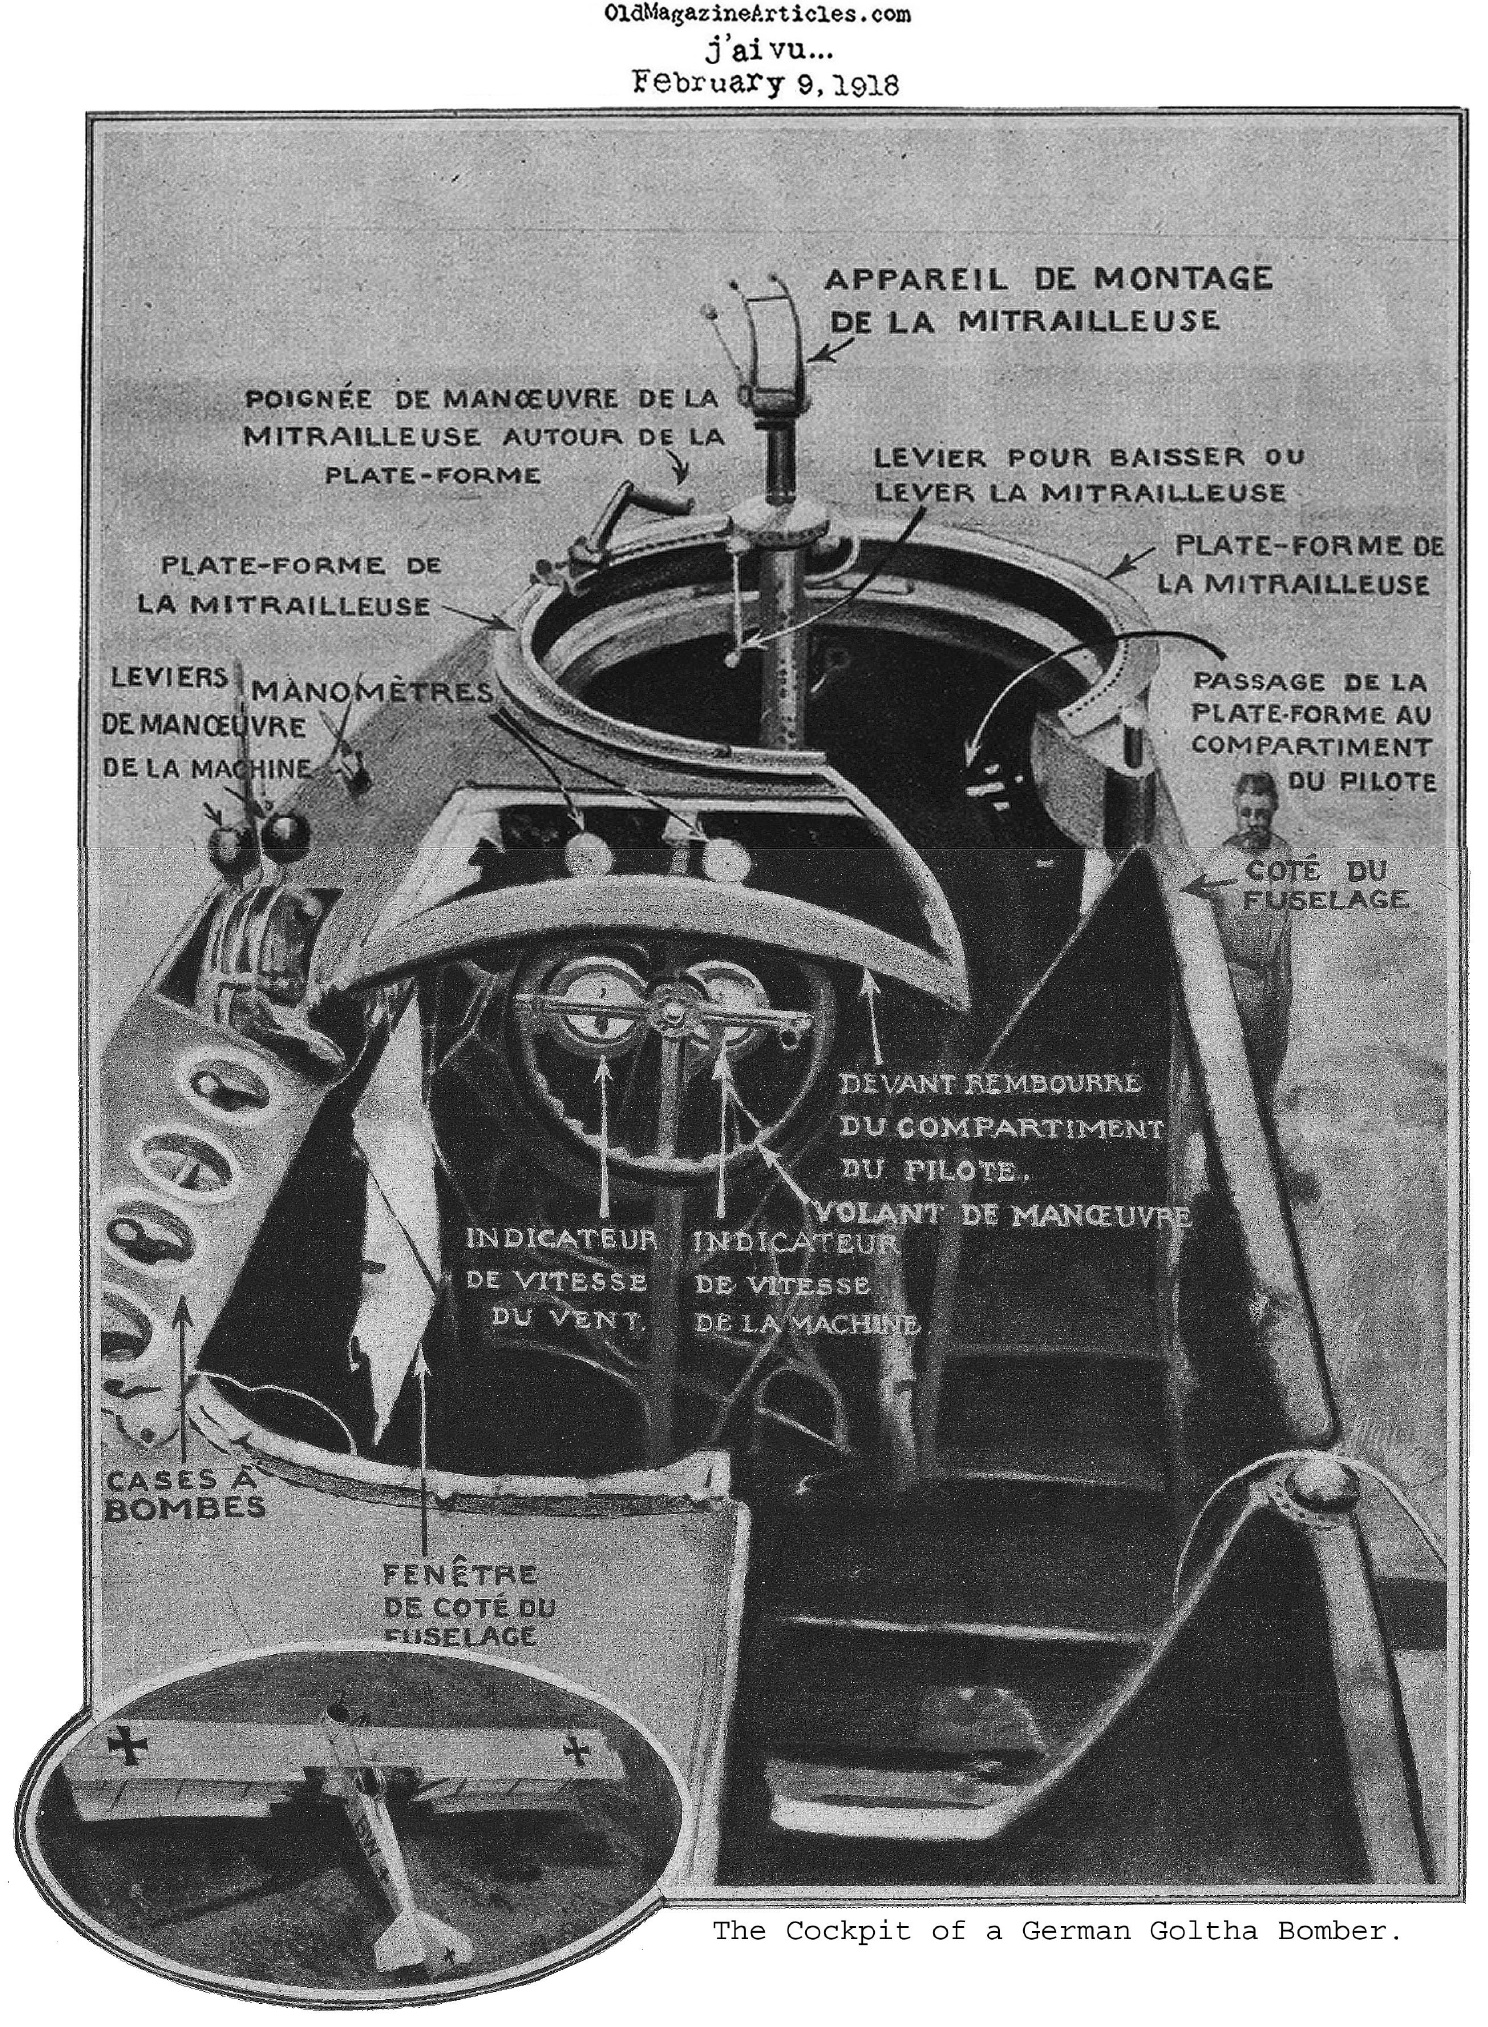 The Cockpit of the  Giant Goltha Bomber (j'ai vu..., 1918)